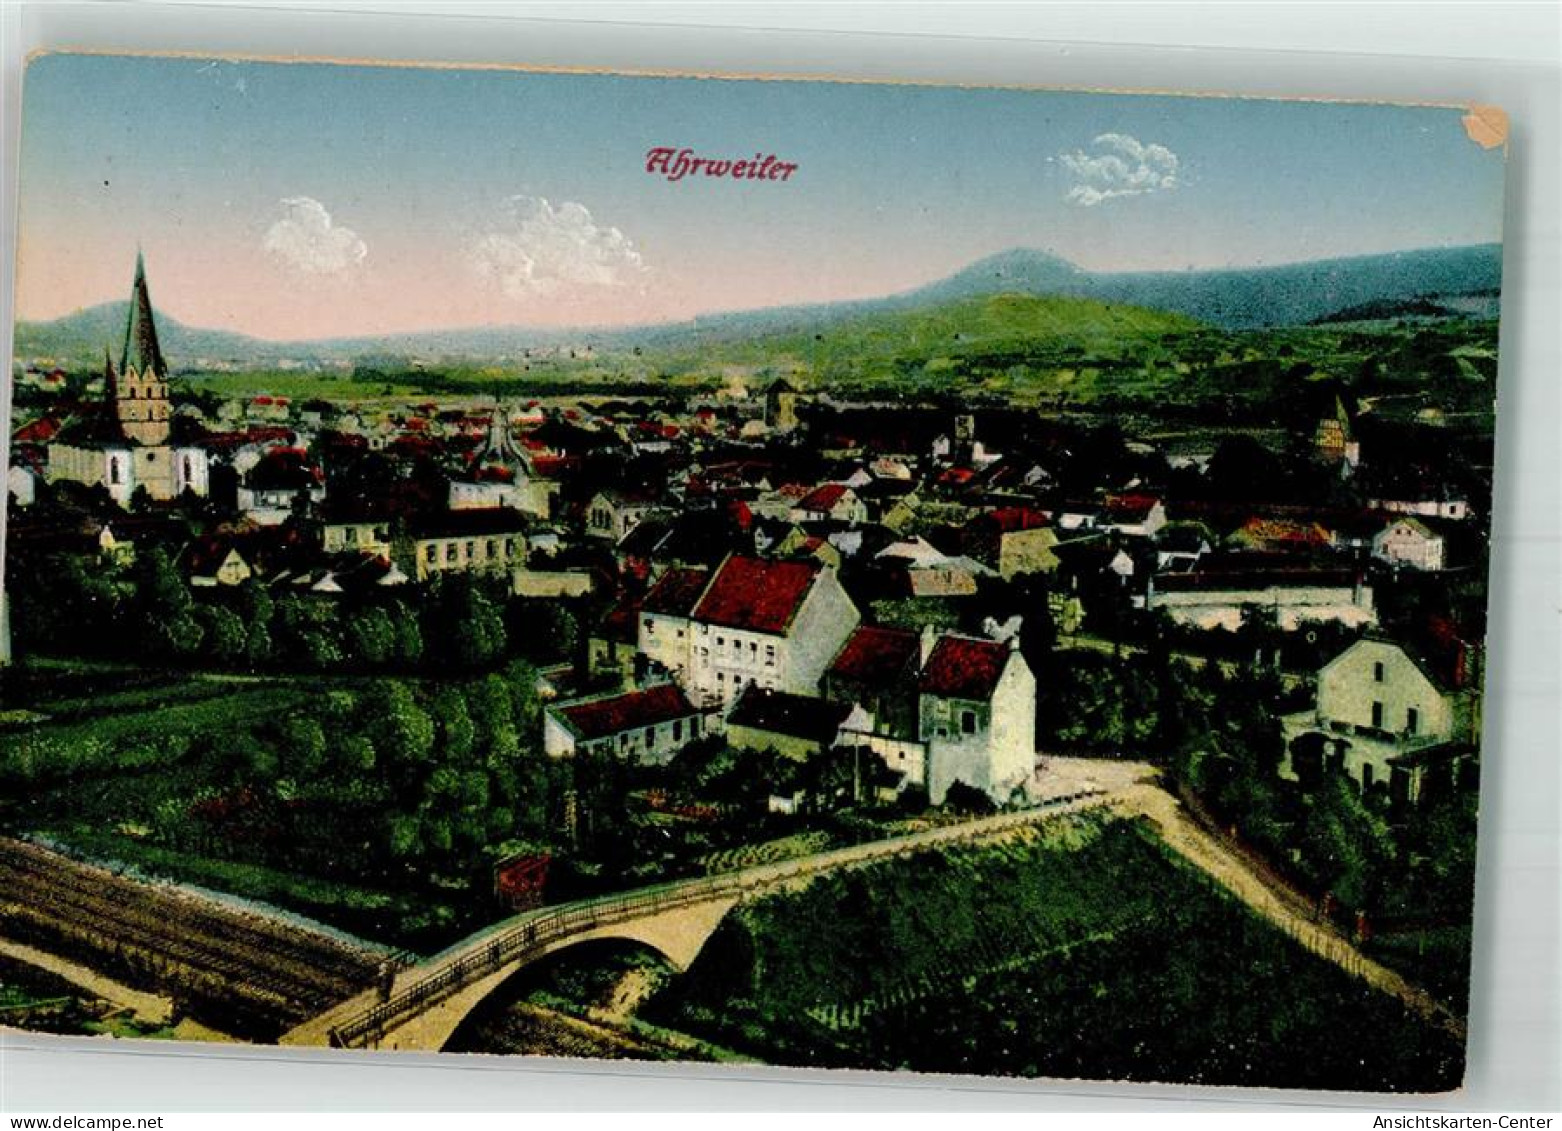 39833705 - Ahrweiler - Bad Neuenahr-Ahrweiler